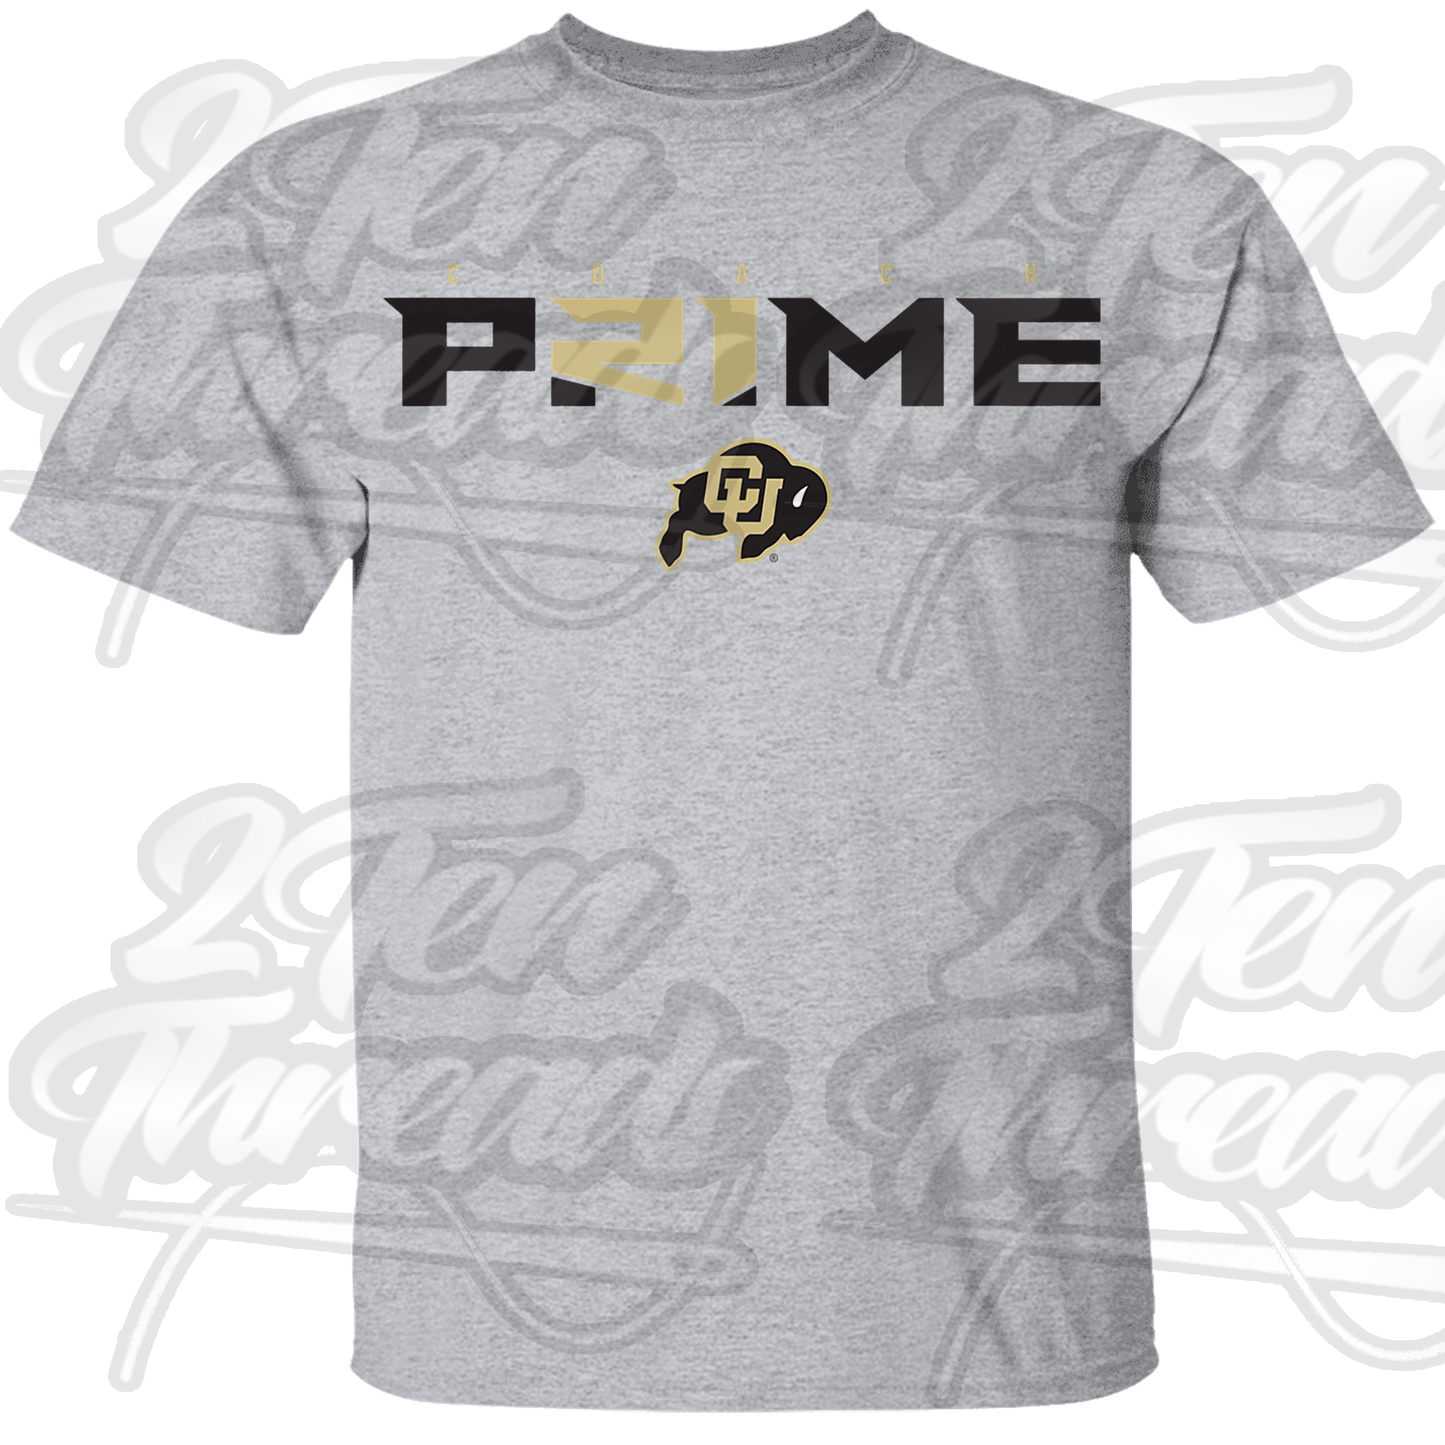 Coach Prime Shirt!